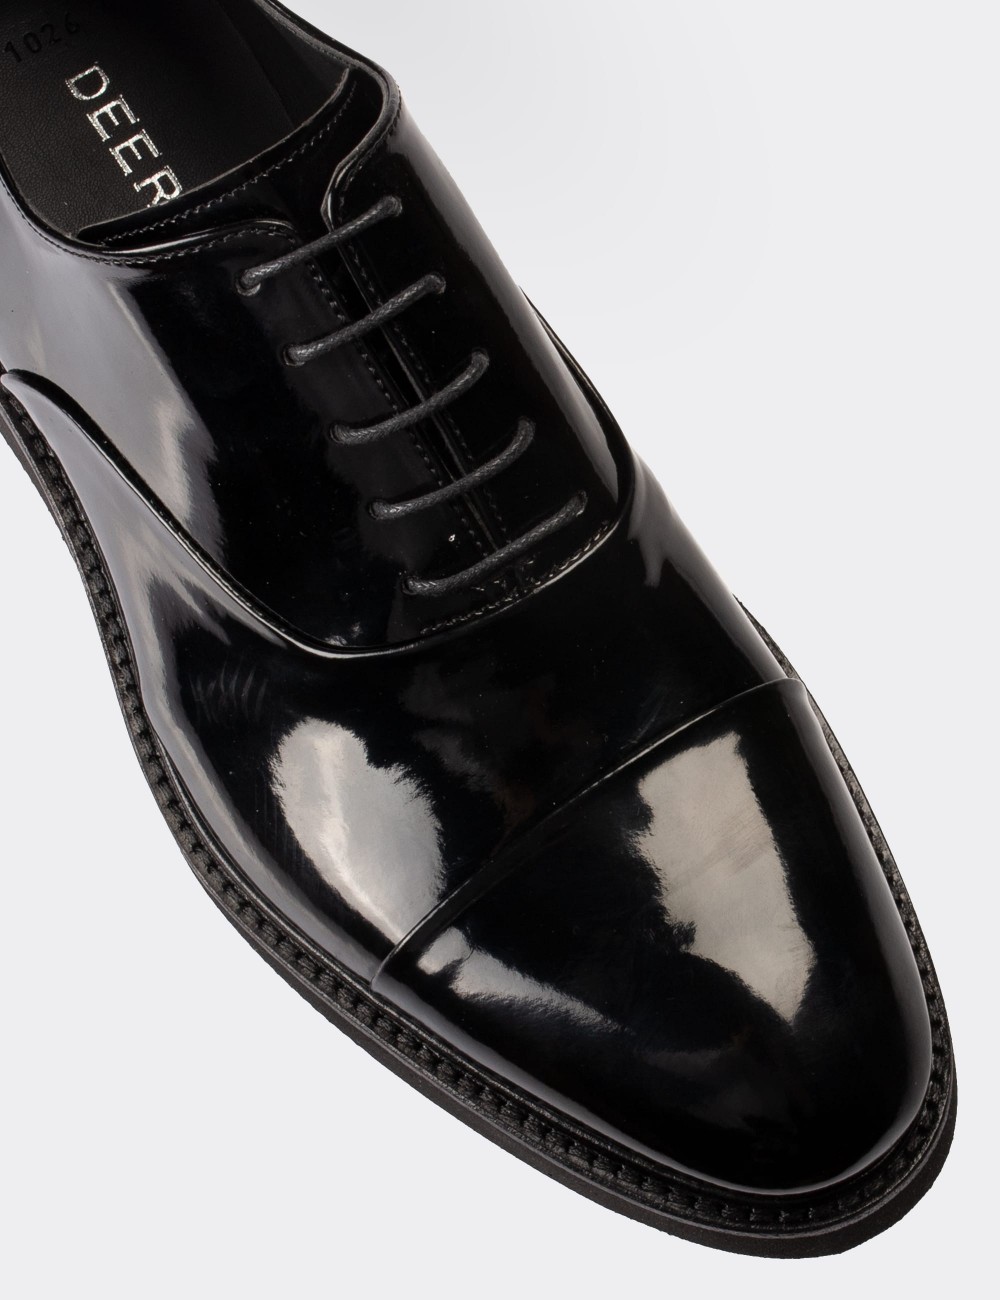 Black Patent Lace-up Shoes - 01026MSYHE13